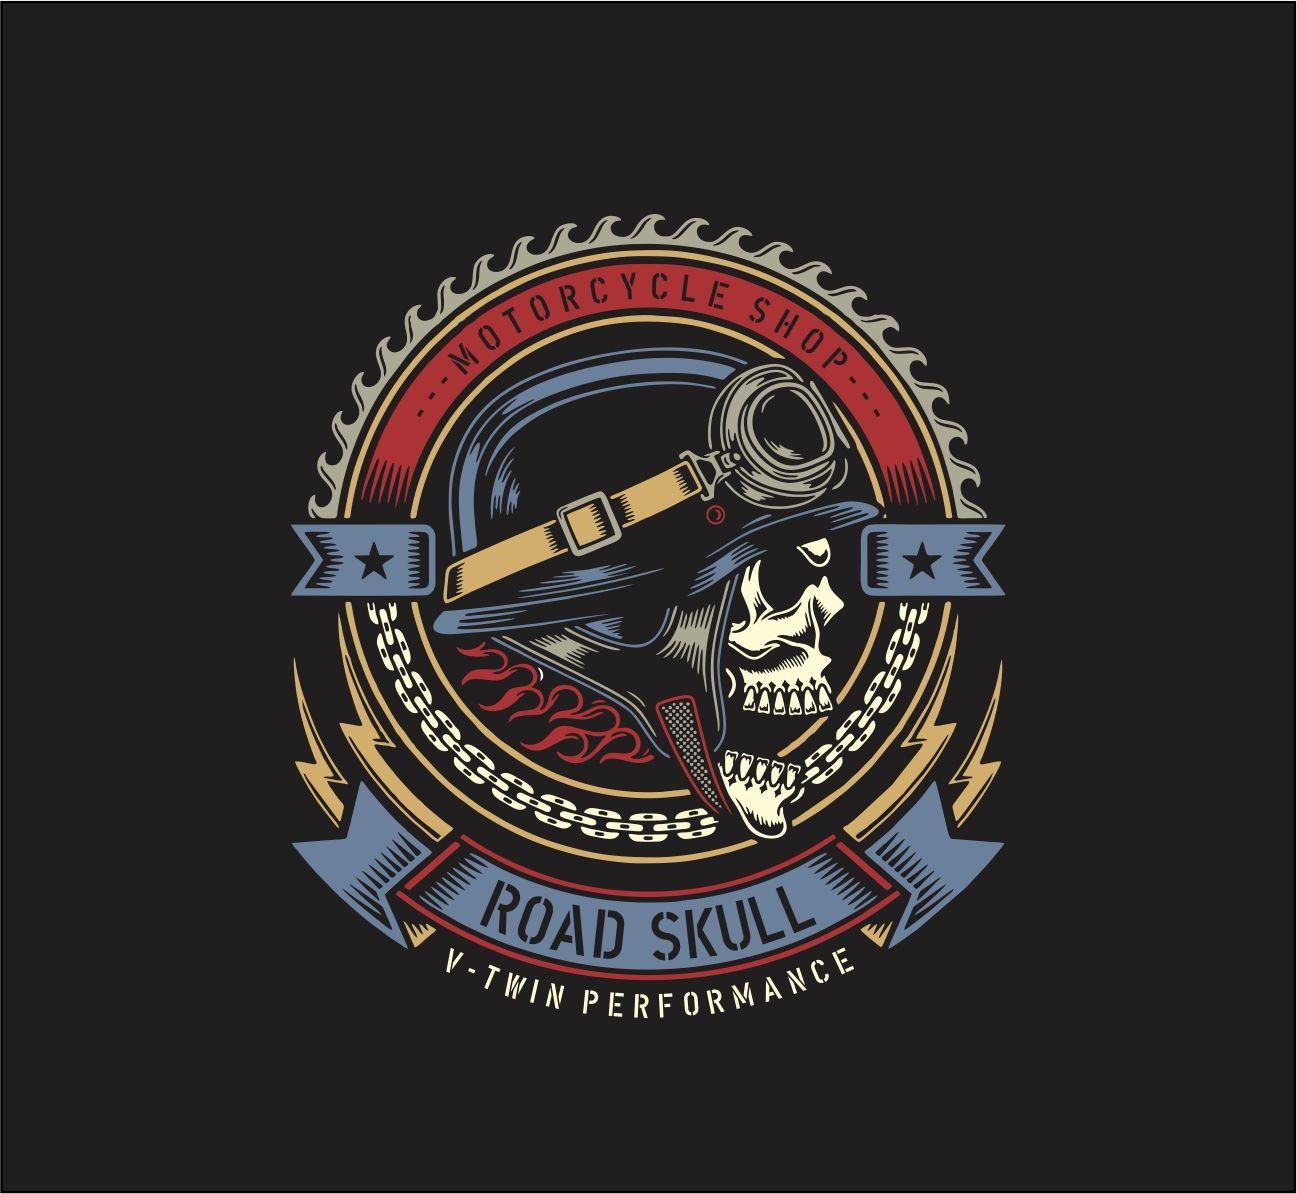 Performance Company Logo - Bold, Playful, It Company Logo Design For RoadSkulls V Twin